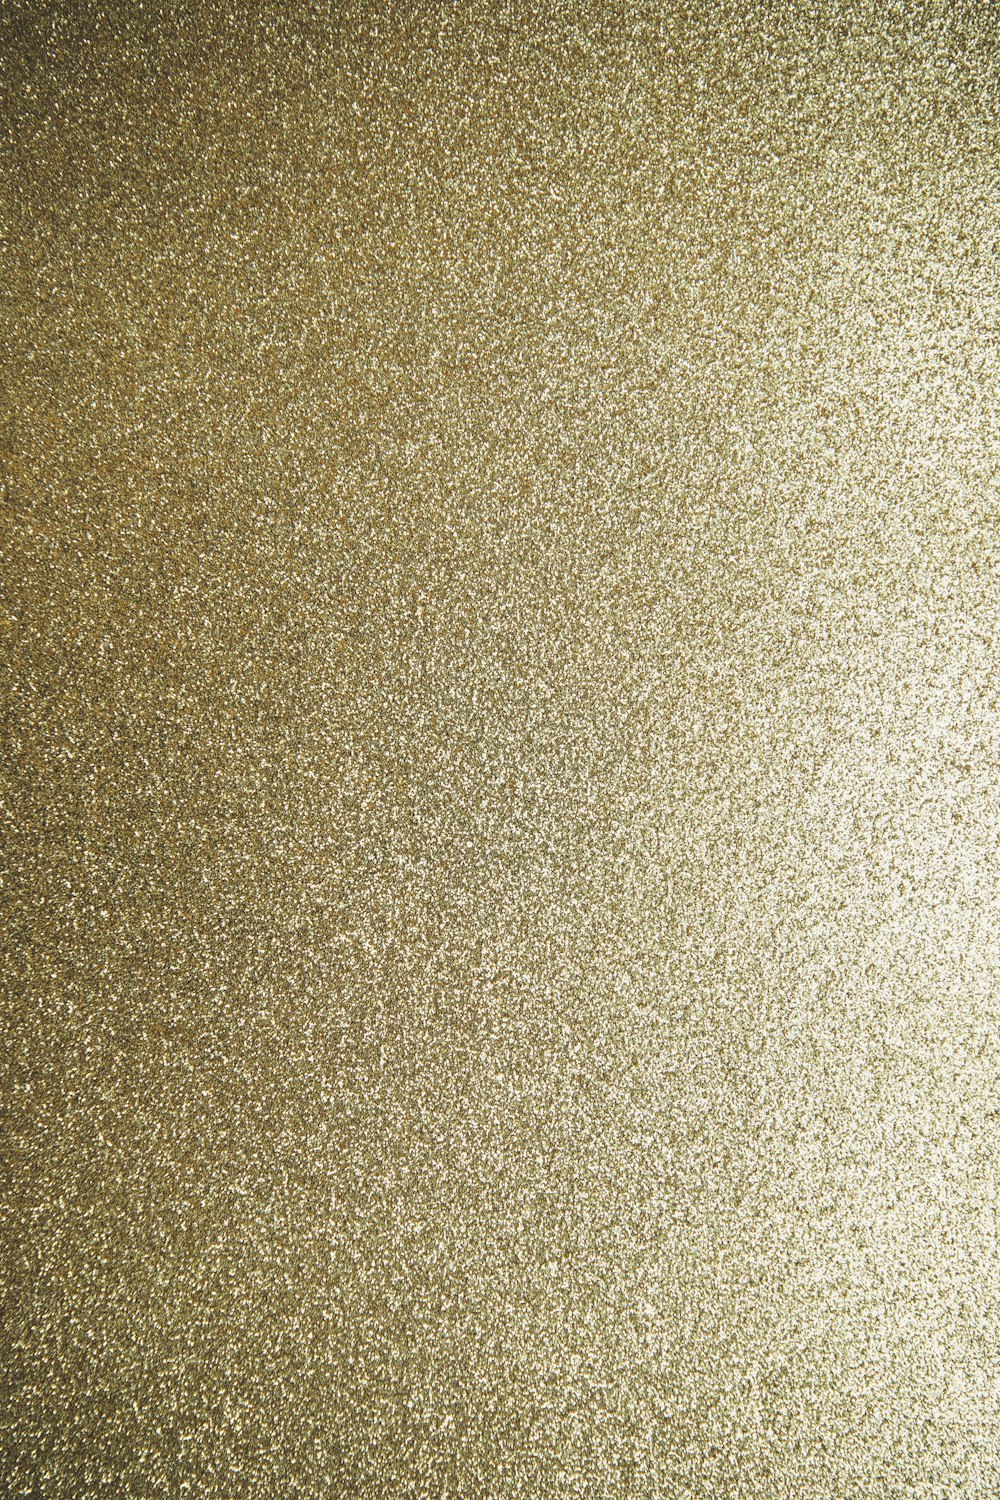 a close up of a gold glitter background